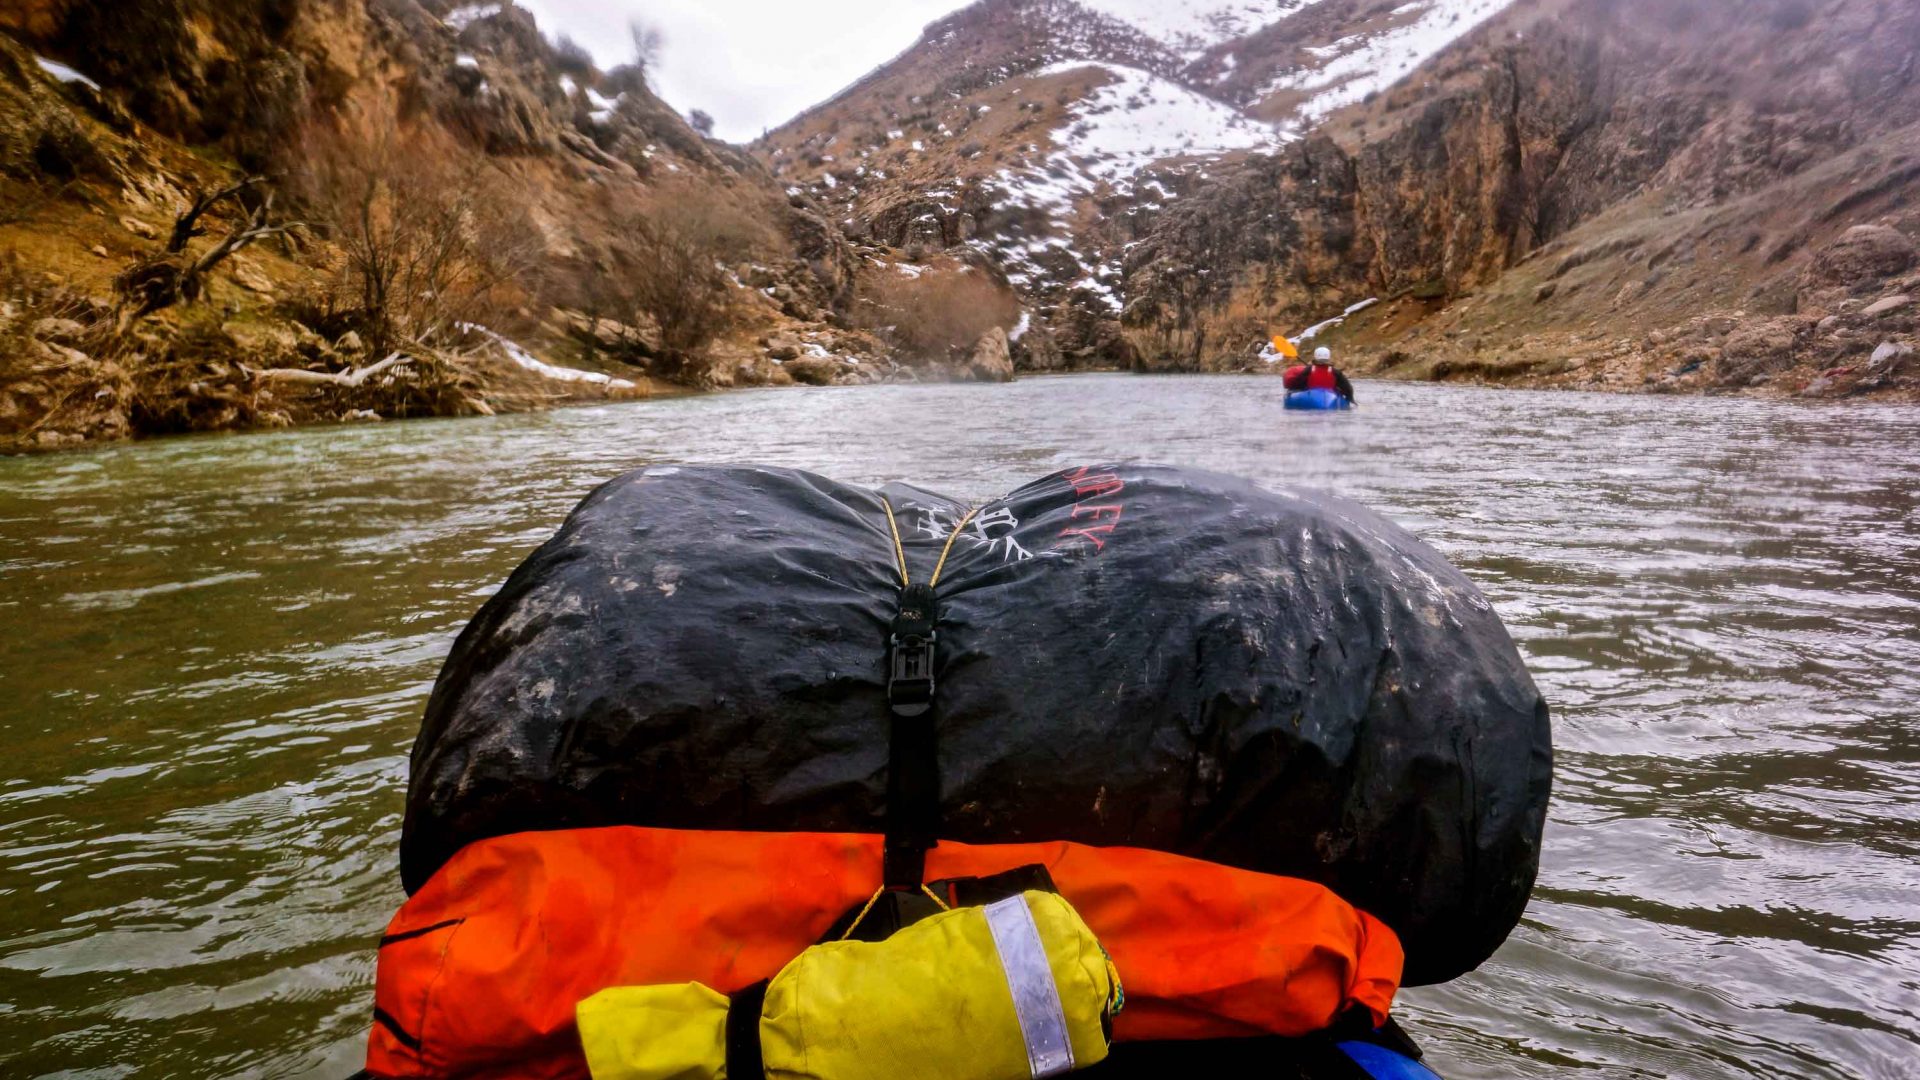 Paddling down the River Karun in Iran.